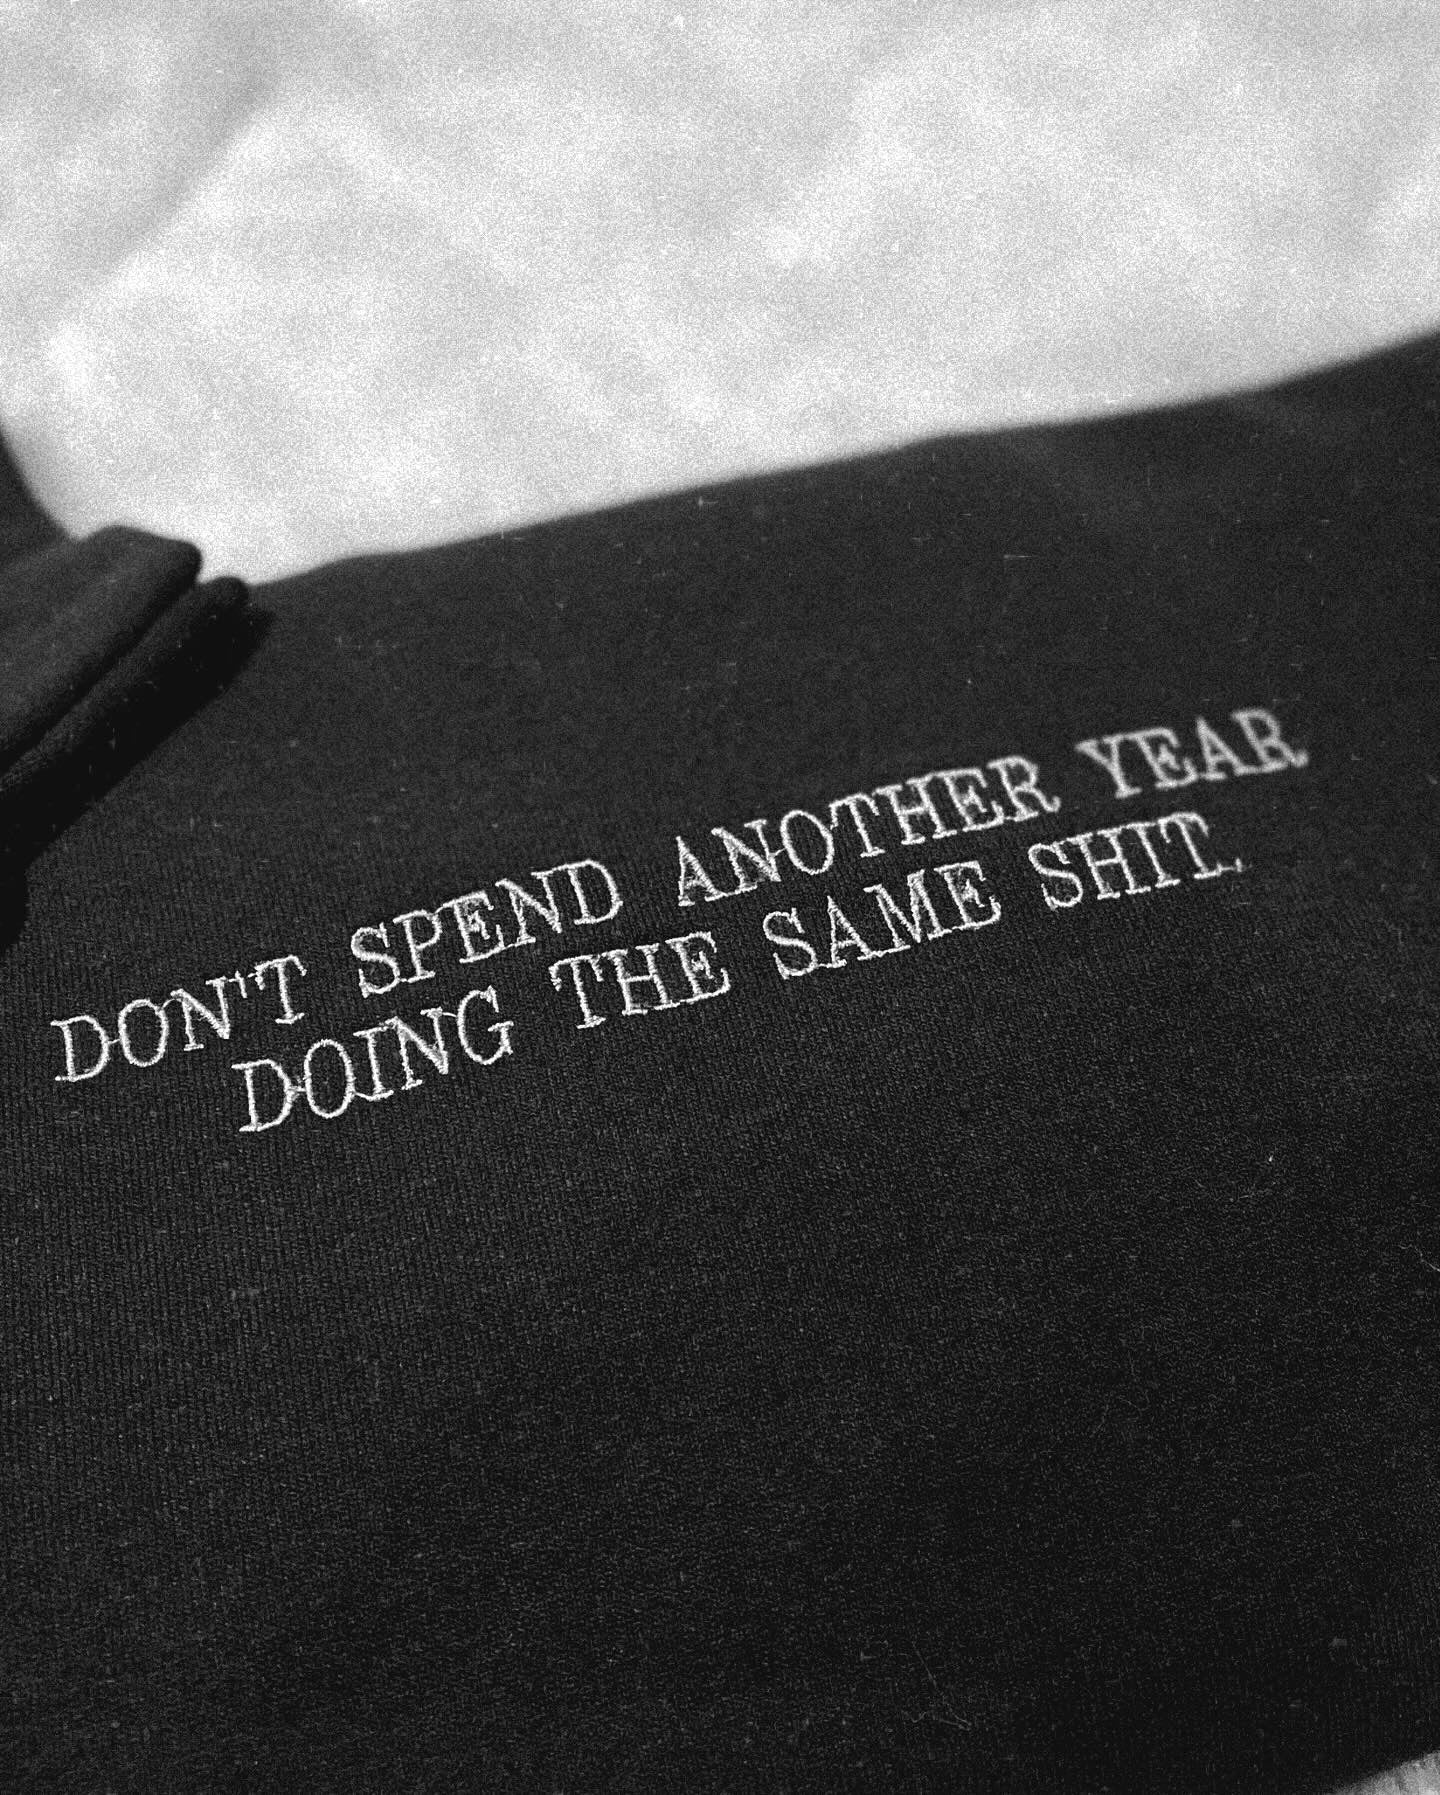 Sweatshirt "Don't spend"